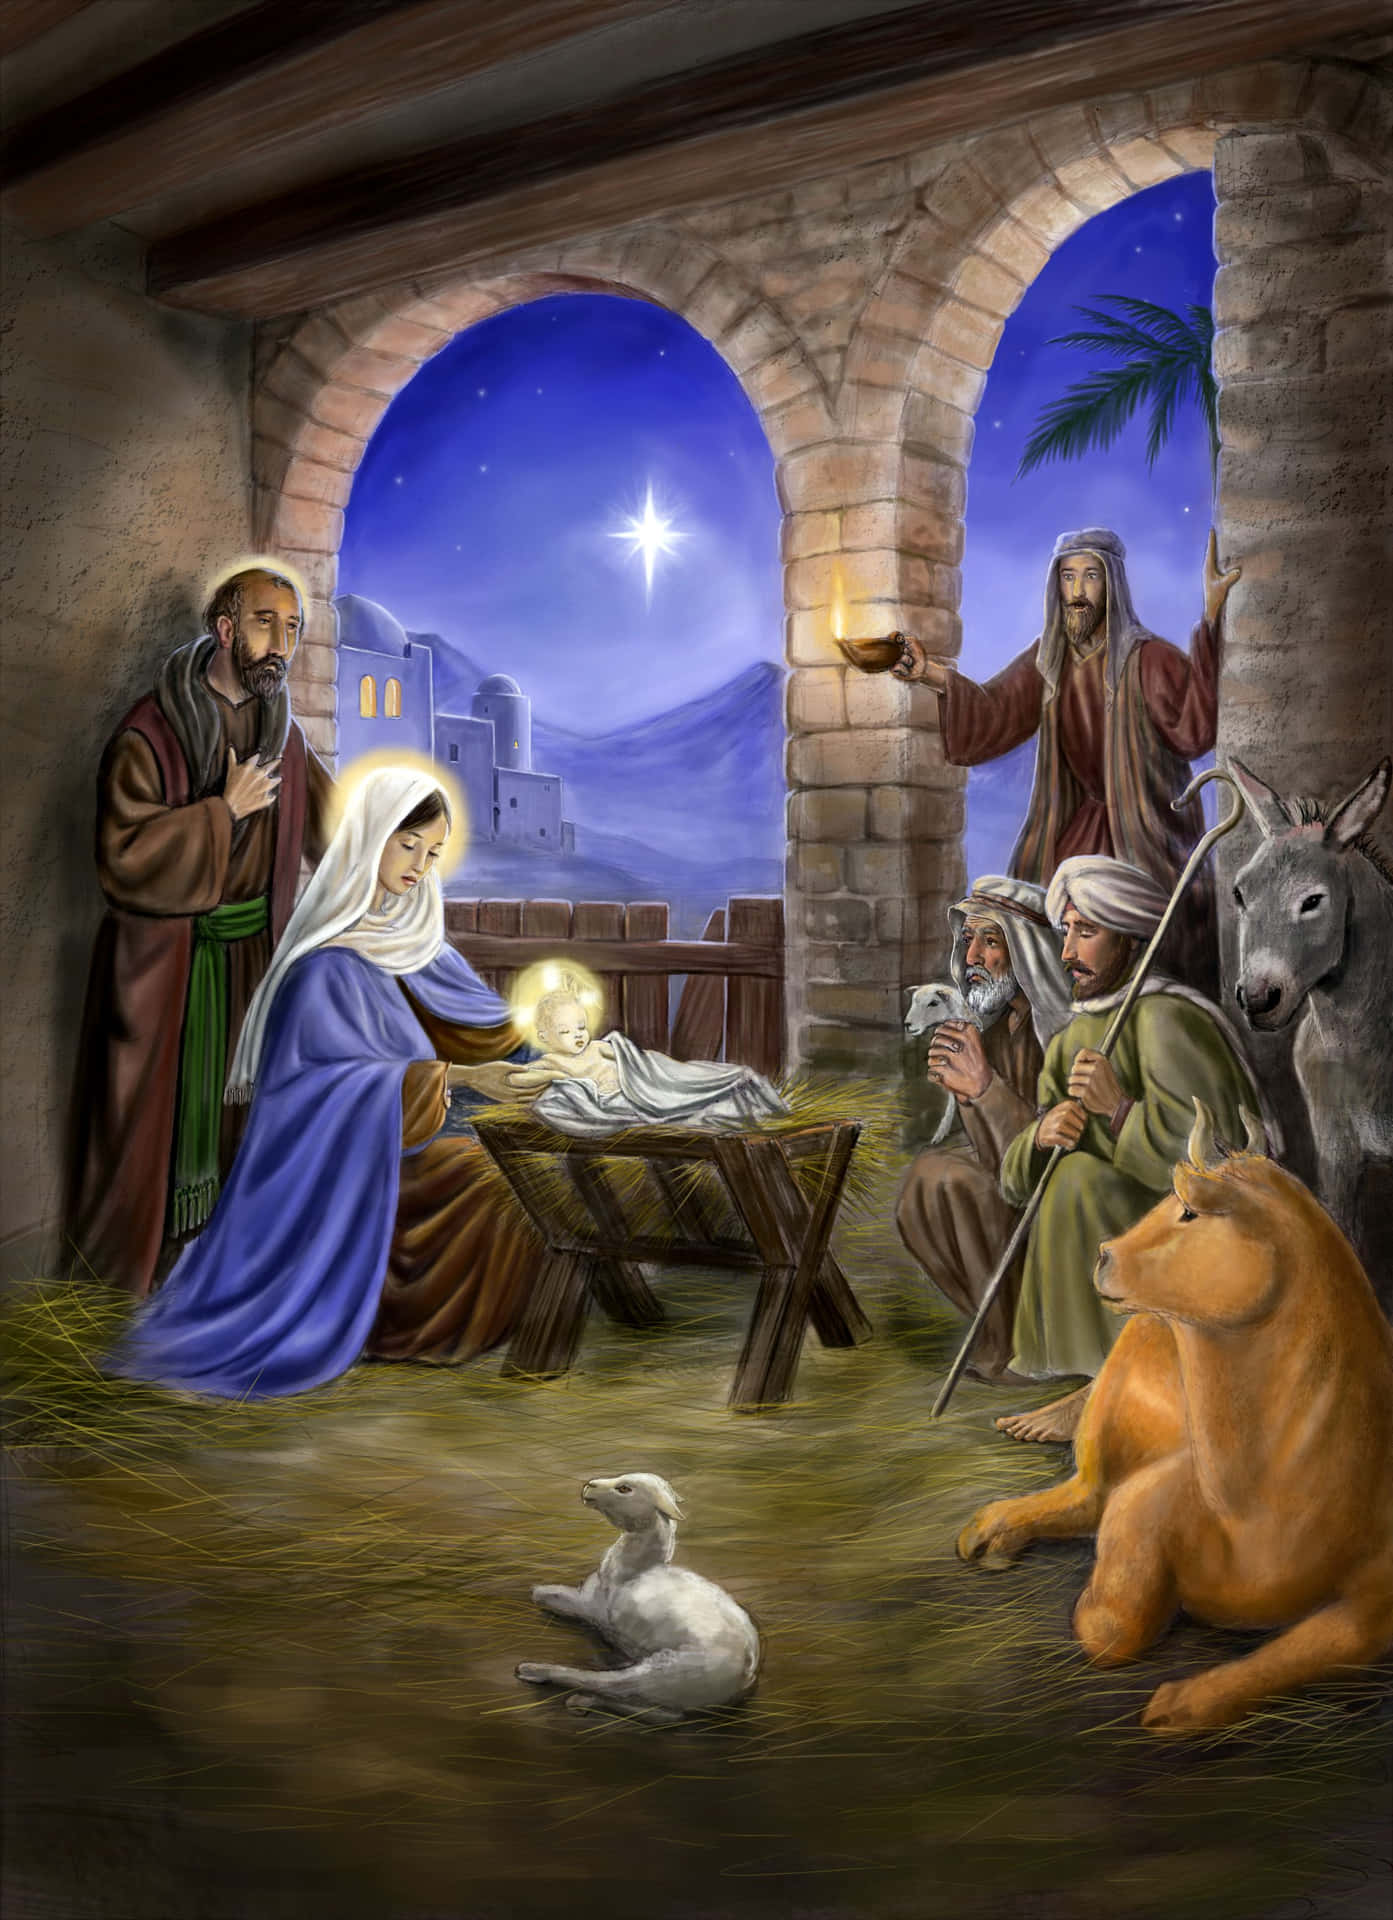 Celebrating the Joy of Christmas with a Manger Scene Wallpaper